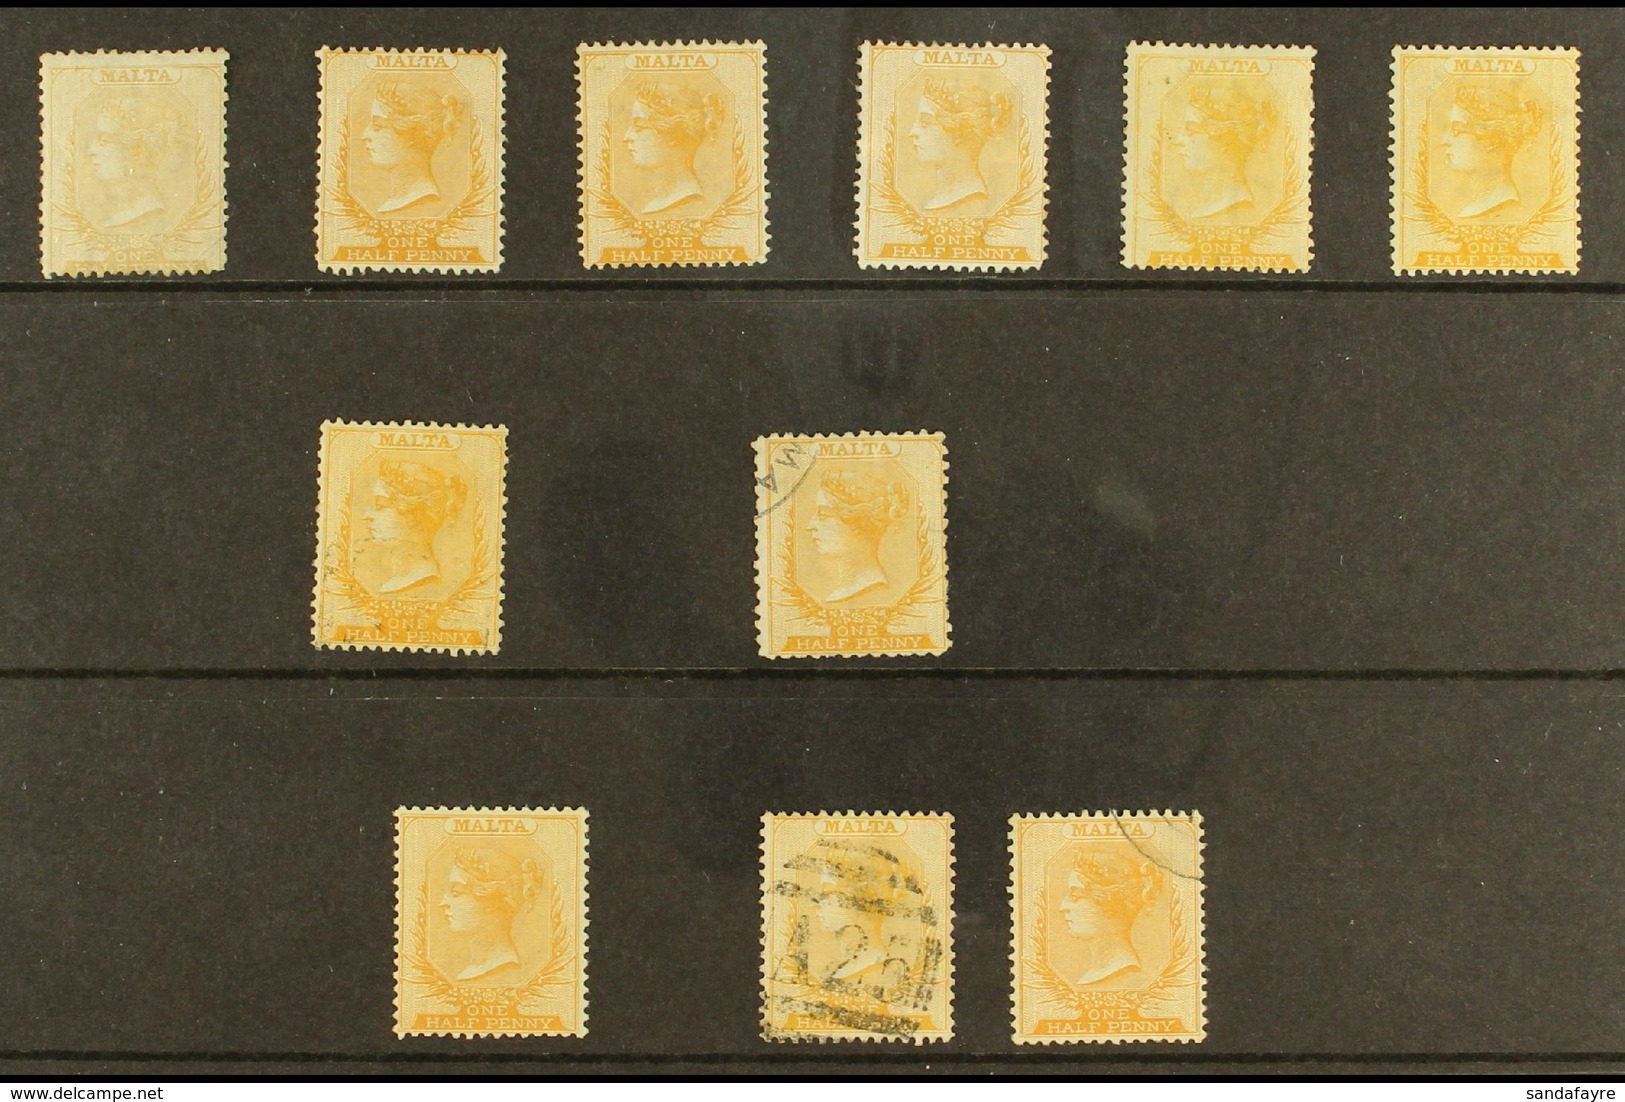 1863-1884 HALFPENNIES Nice Little Collection Comprising 1863-81(wmk Crown CC, Perf 14) ½d Mint Shades (6), Plus ½d Orang - Malte (...-1964)